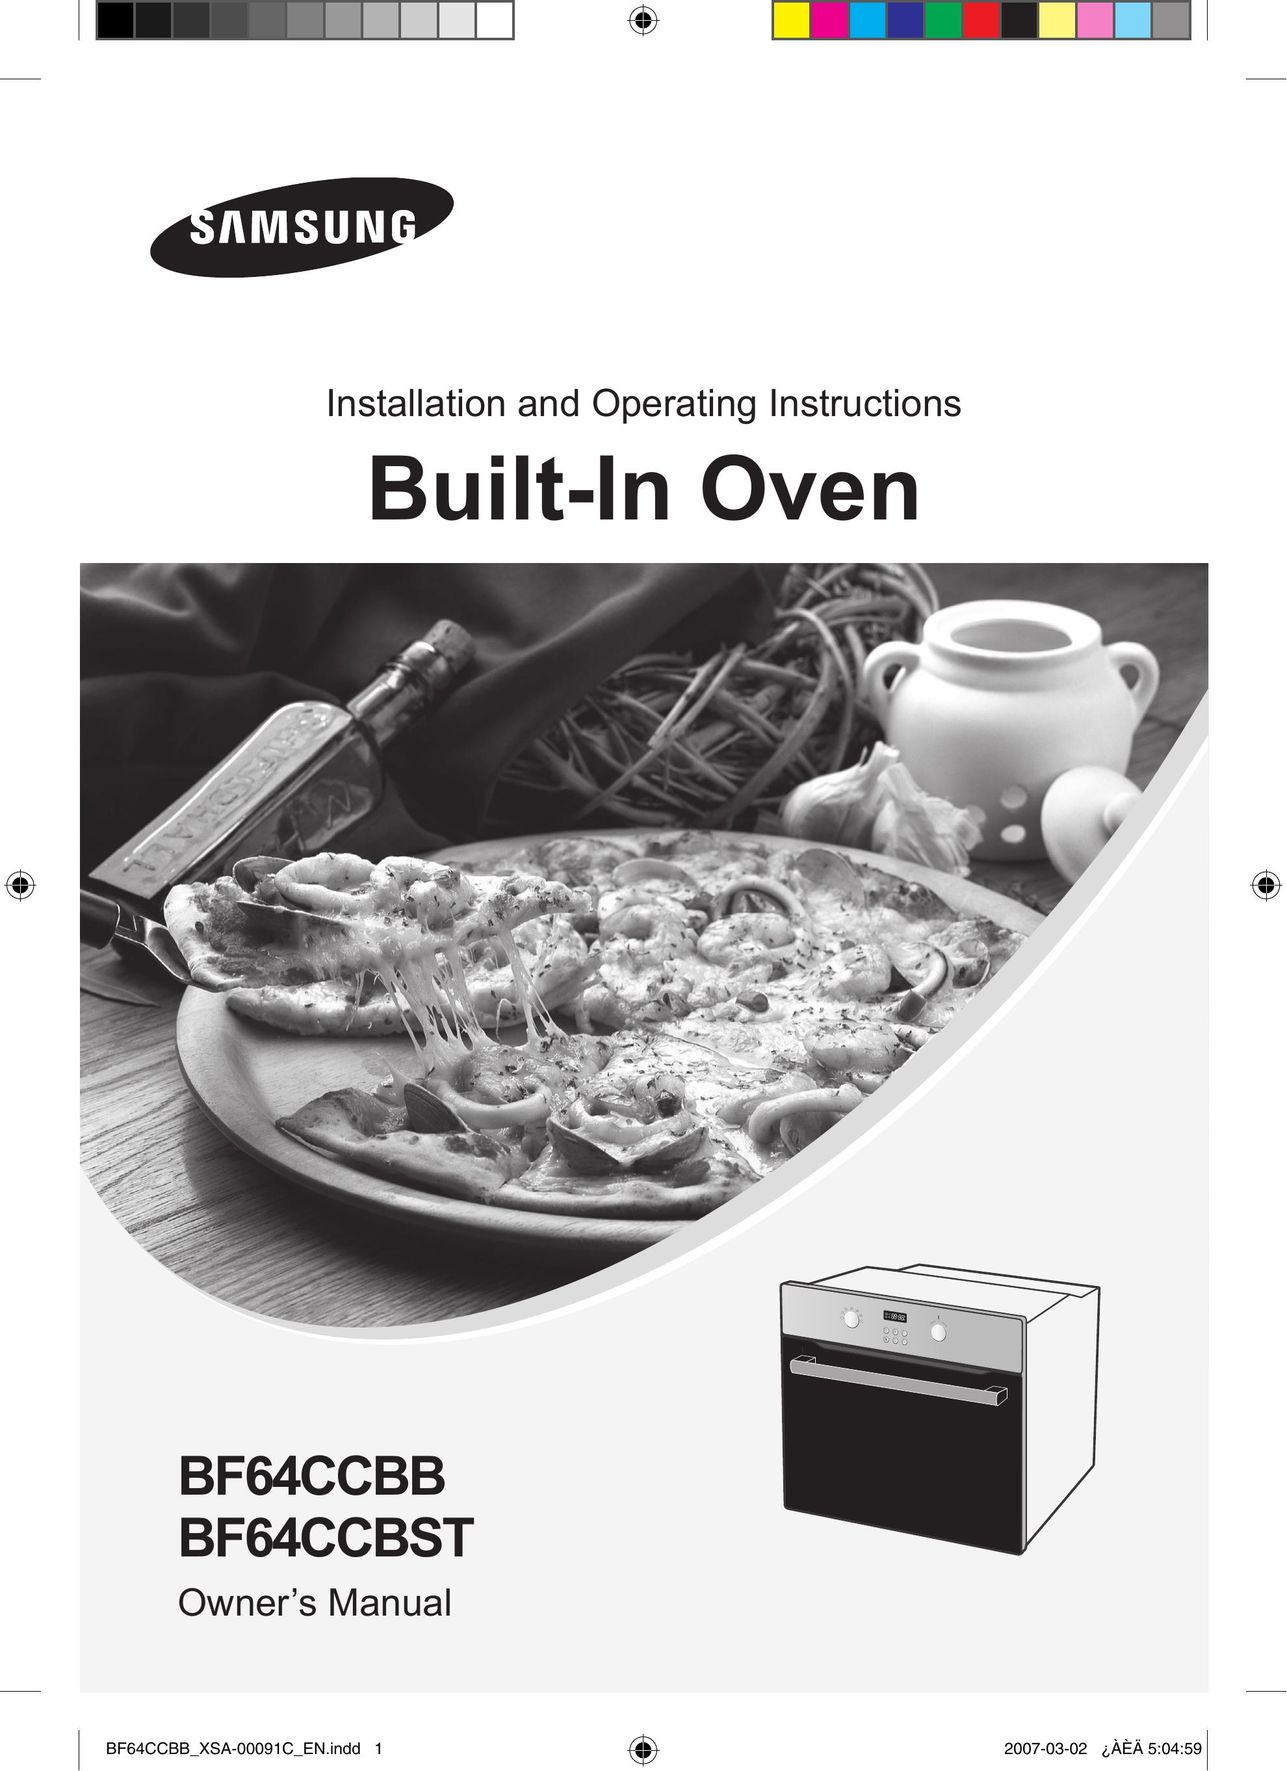 Samsung BF64CCBB Oven User Manual